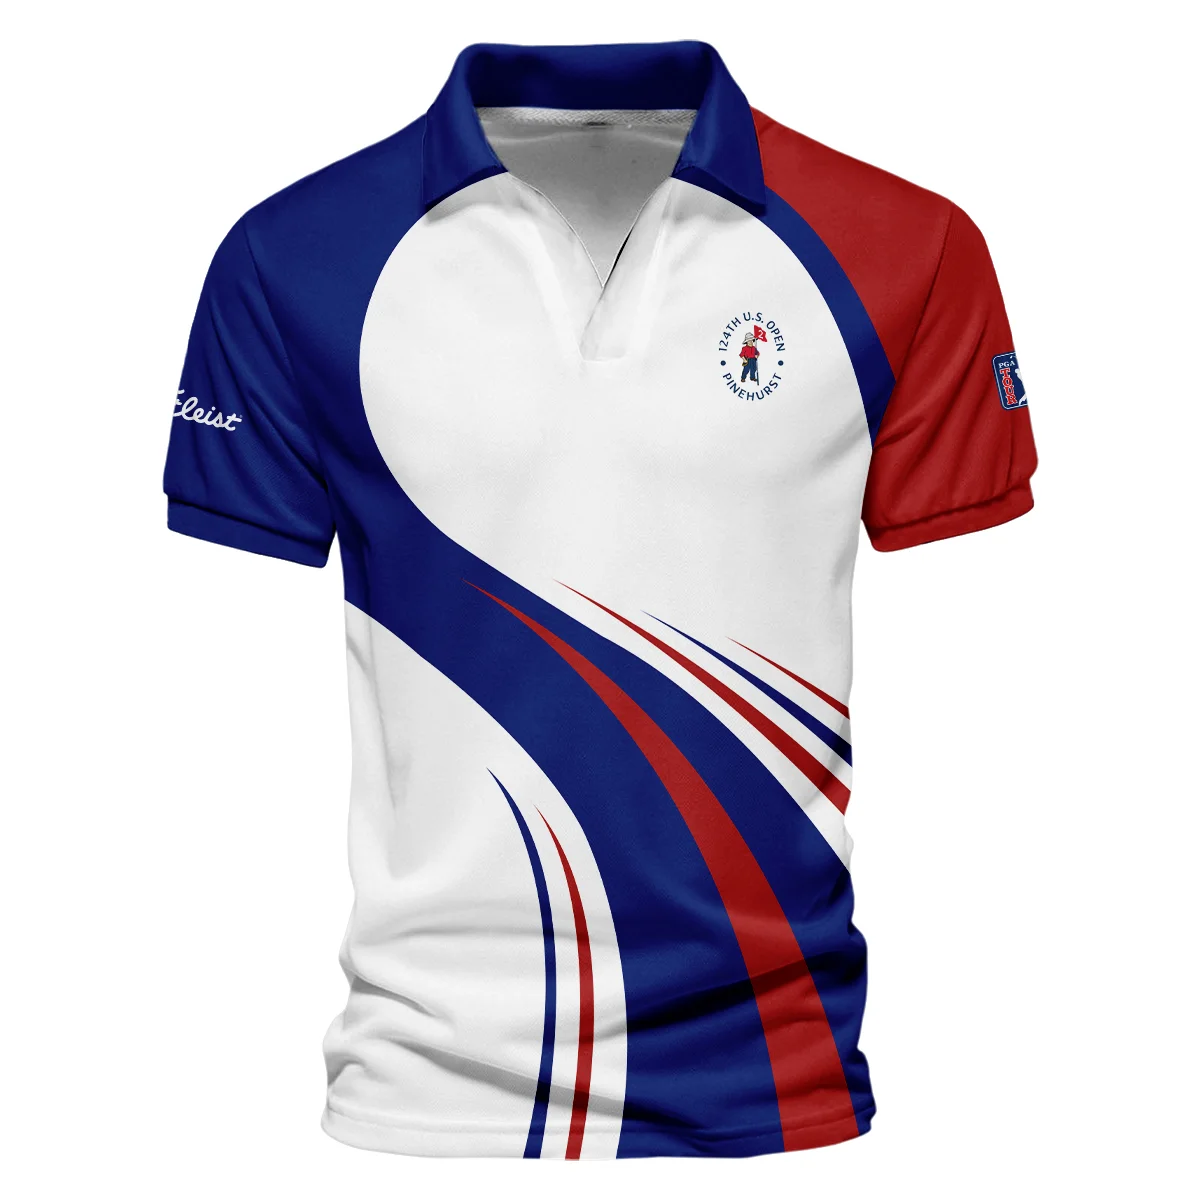 Titleist 124th U.S. Open Pinehurst Golf Blue Red White Background Vneck Polo Shirt Style Classic Polo Shirt For Men